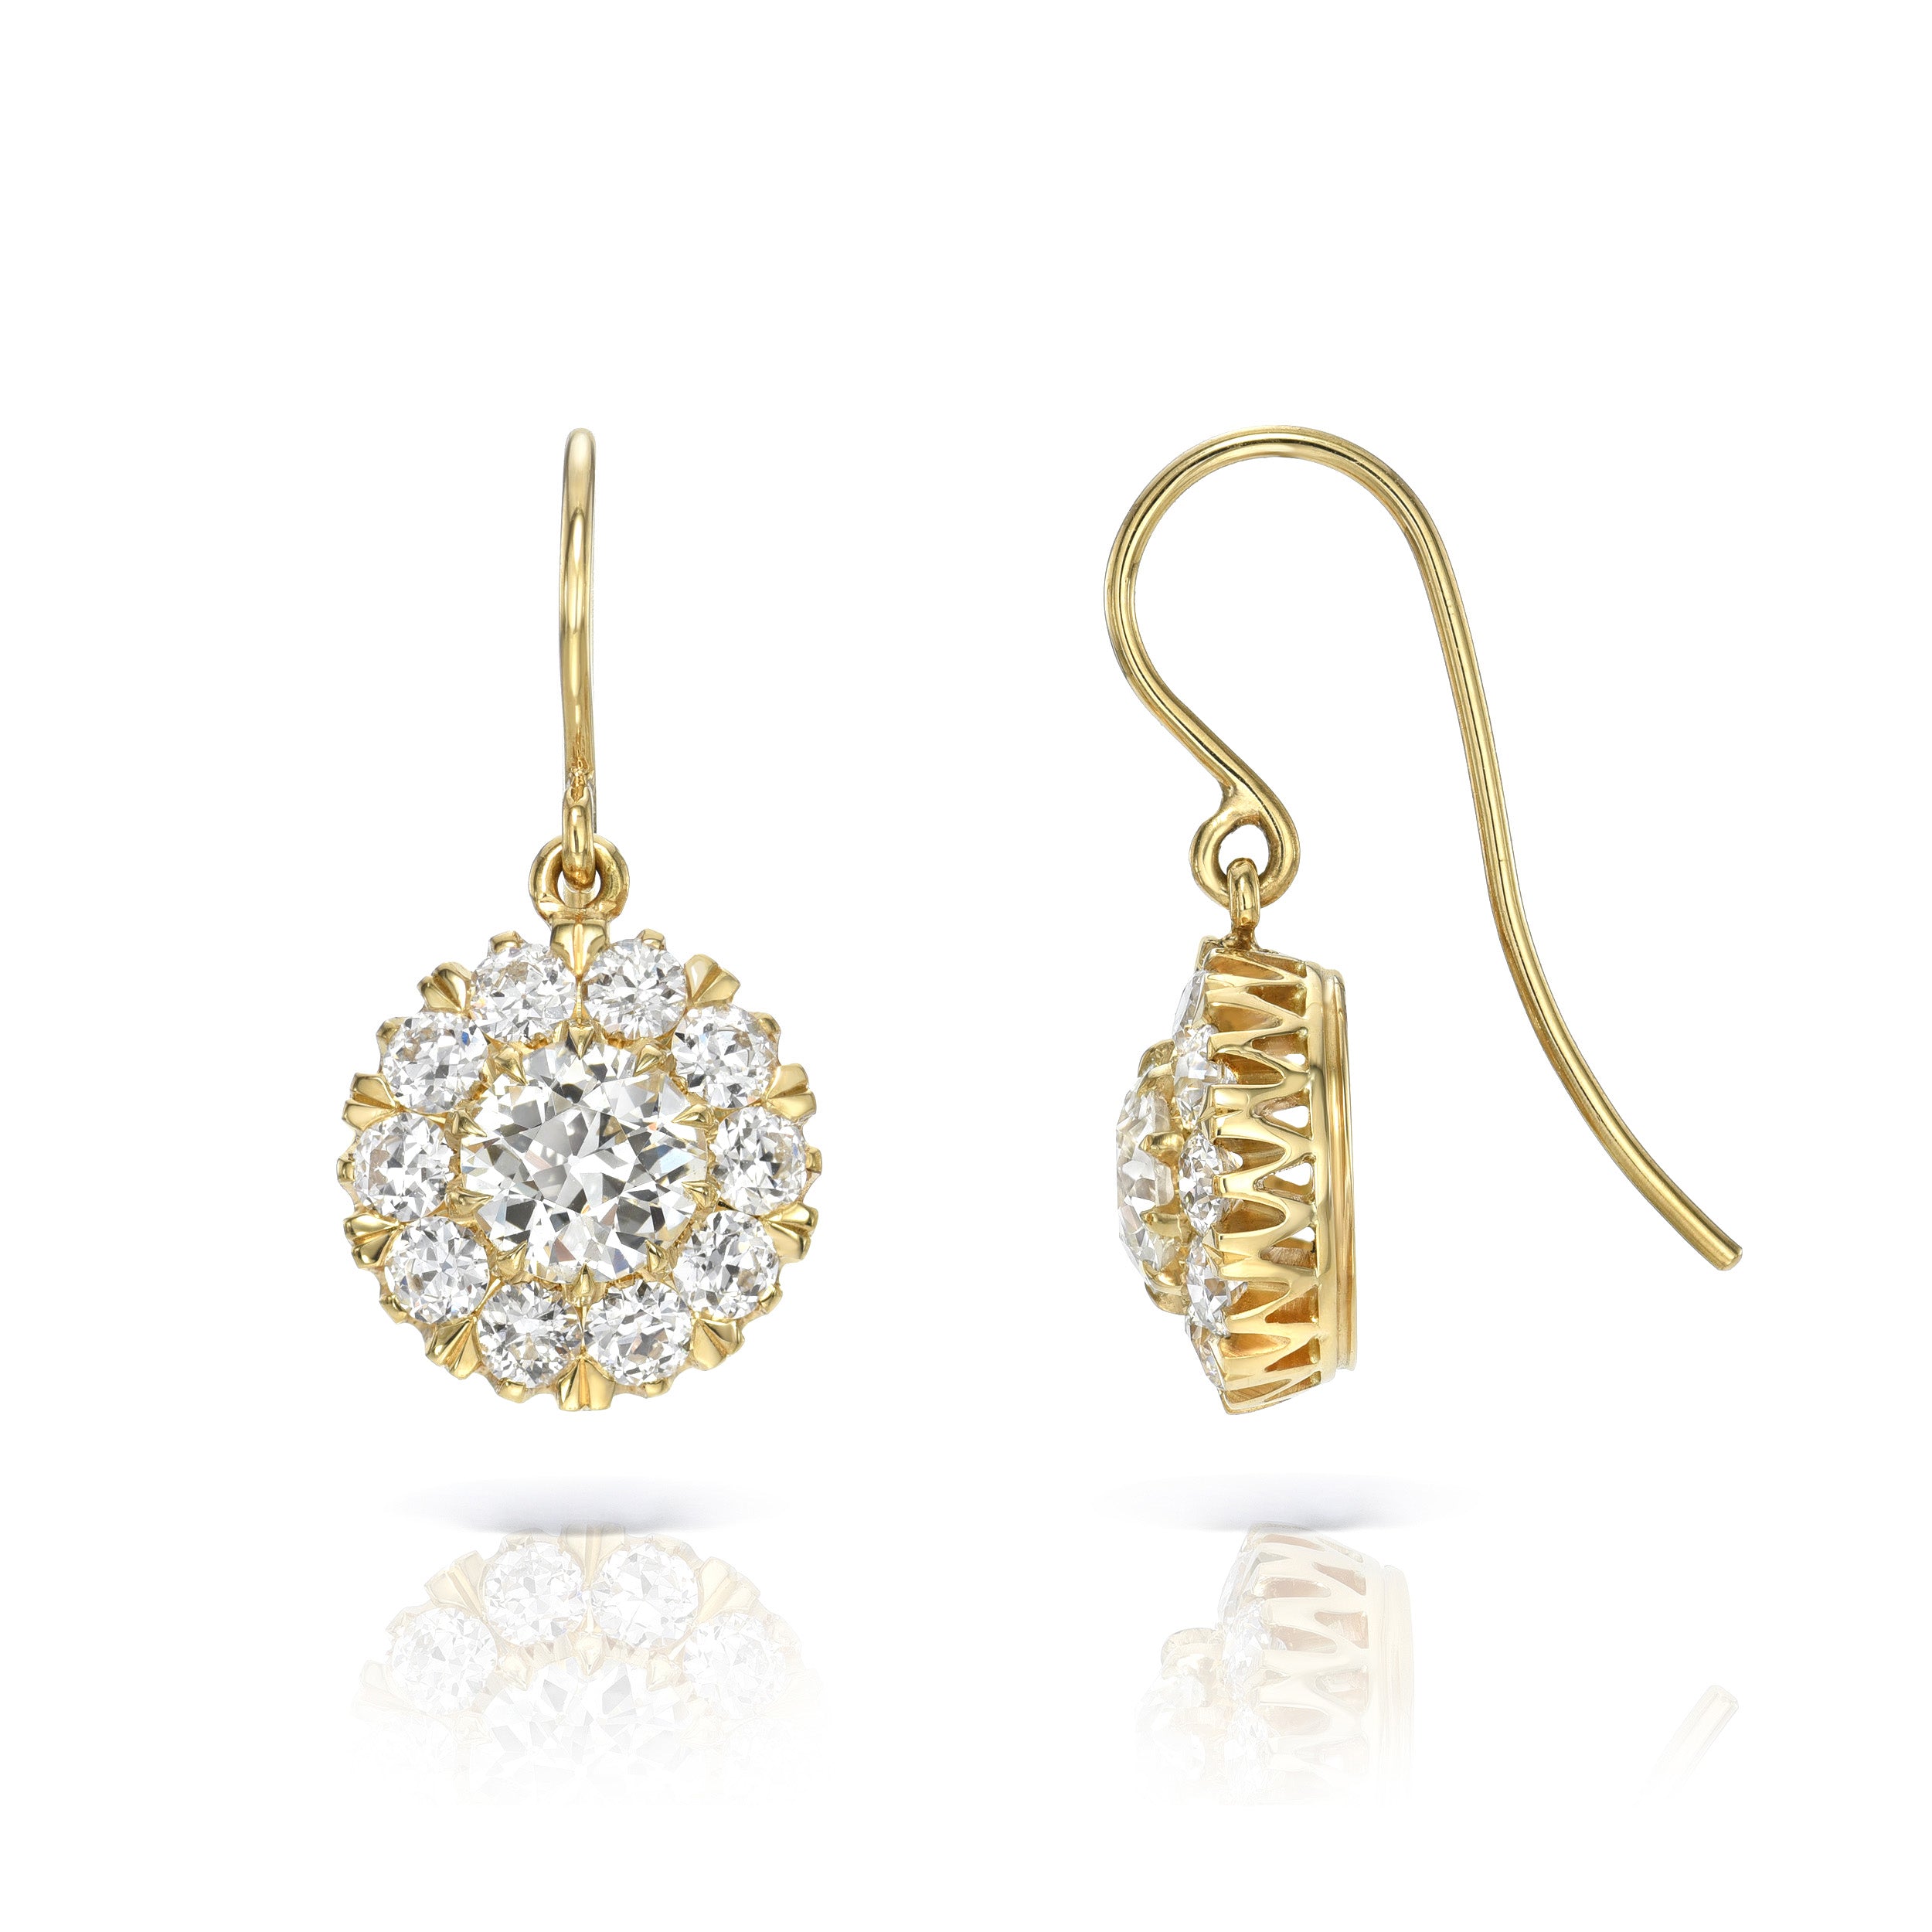 SINGLE STONE TALIA DROPS | Earrings featuring 1.58ctw J-L/VS2-SI2 GIA certified old European cut diamonds with 1.58ctw old European cut accent diamonds prong set in handcrafted 18K yellow gold drop earrings.